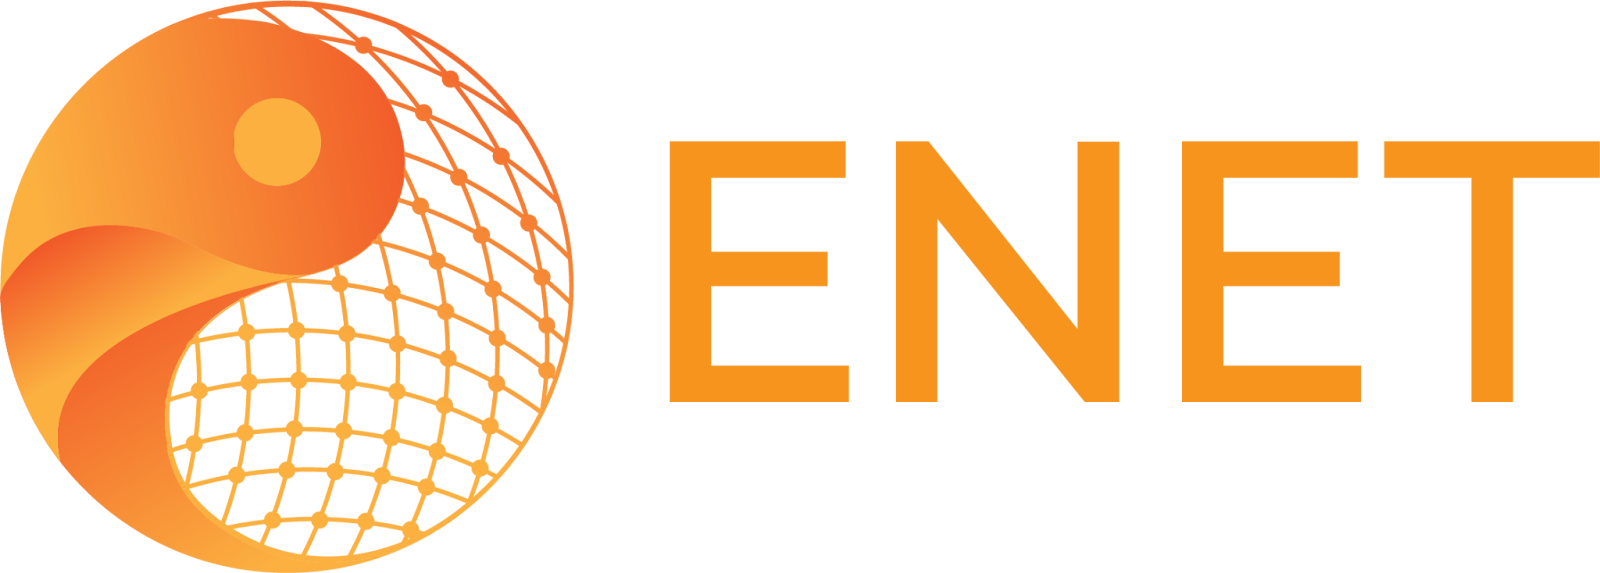 Enet Tech logo